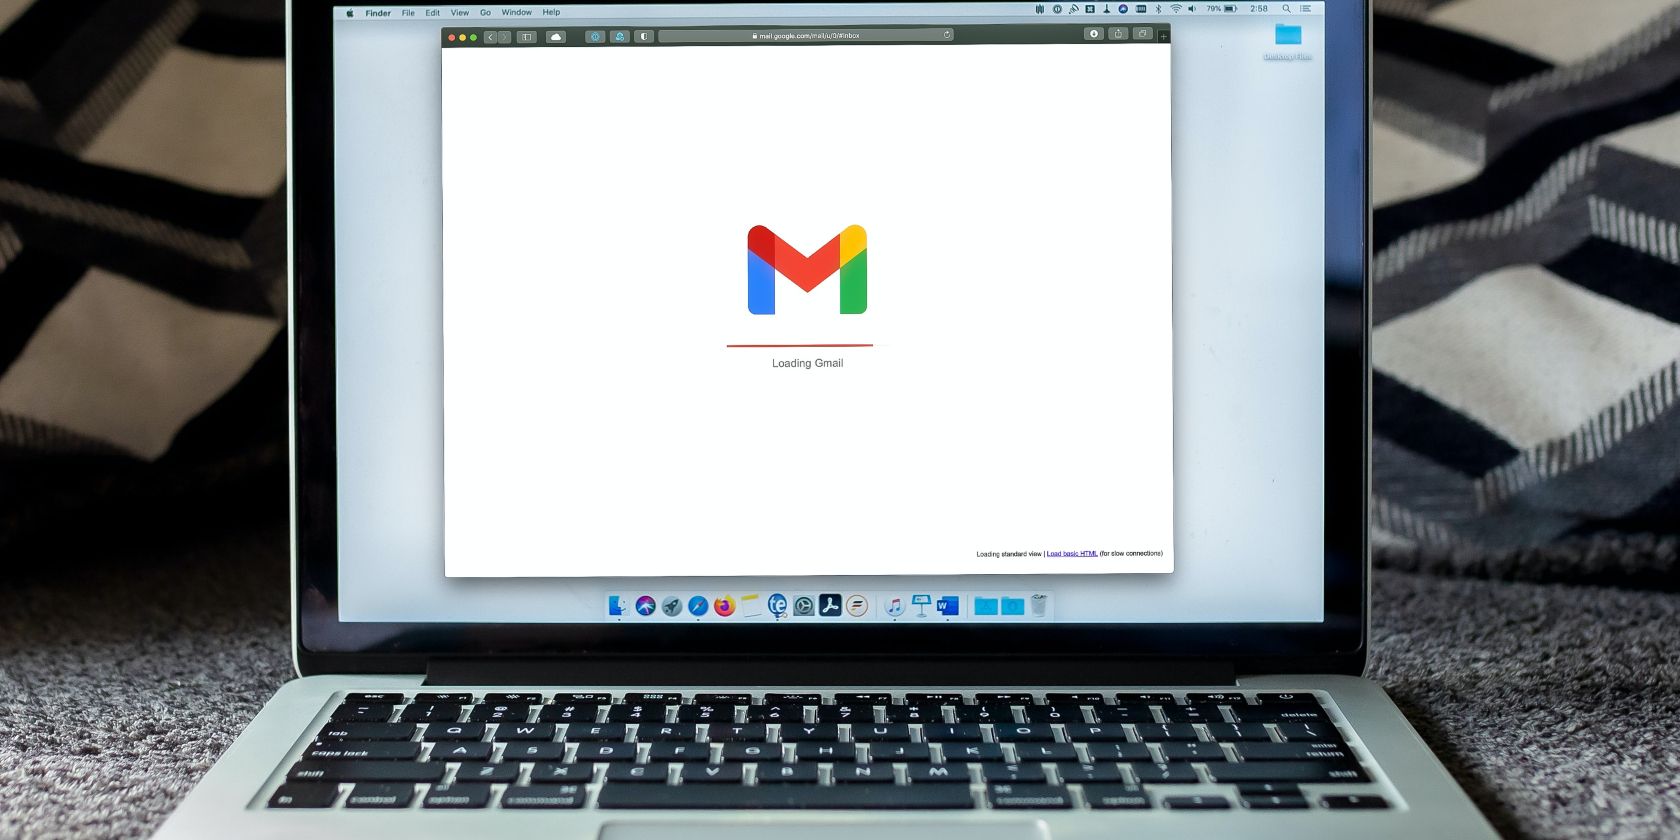 Gmail opening on Safari on a MacBook